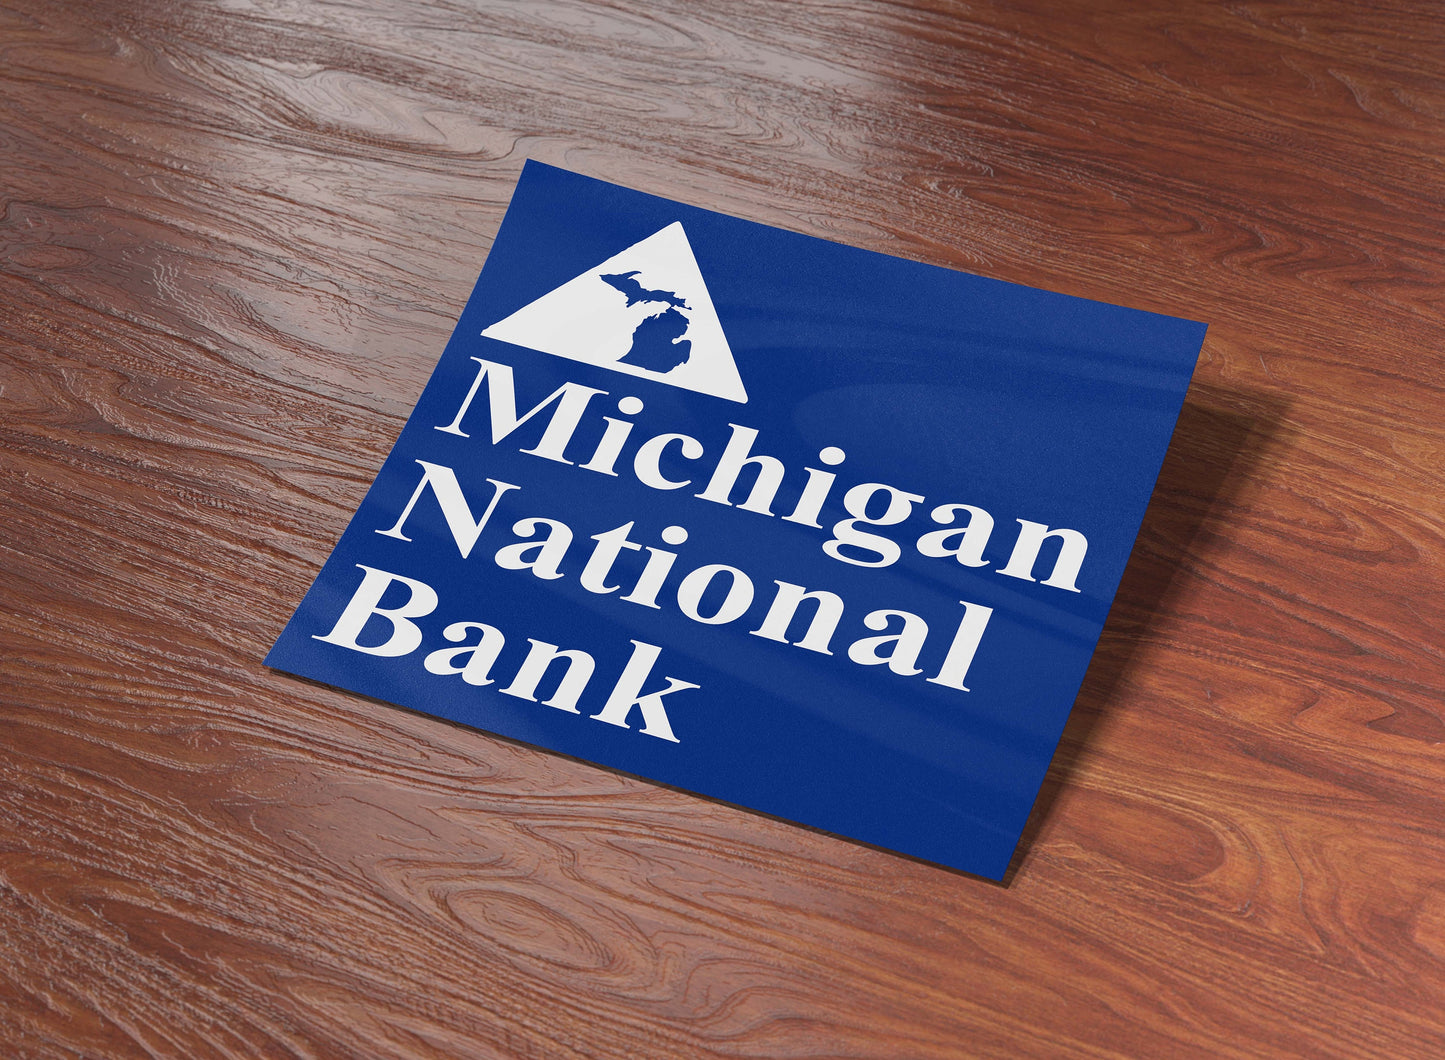 Michigan National Bank Sticker